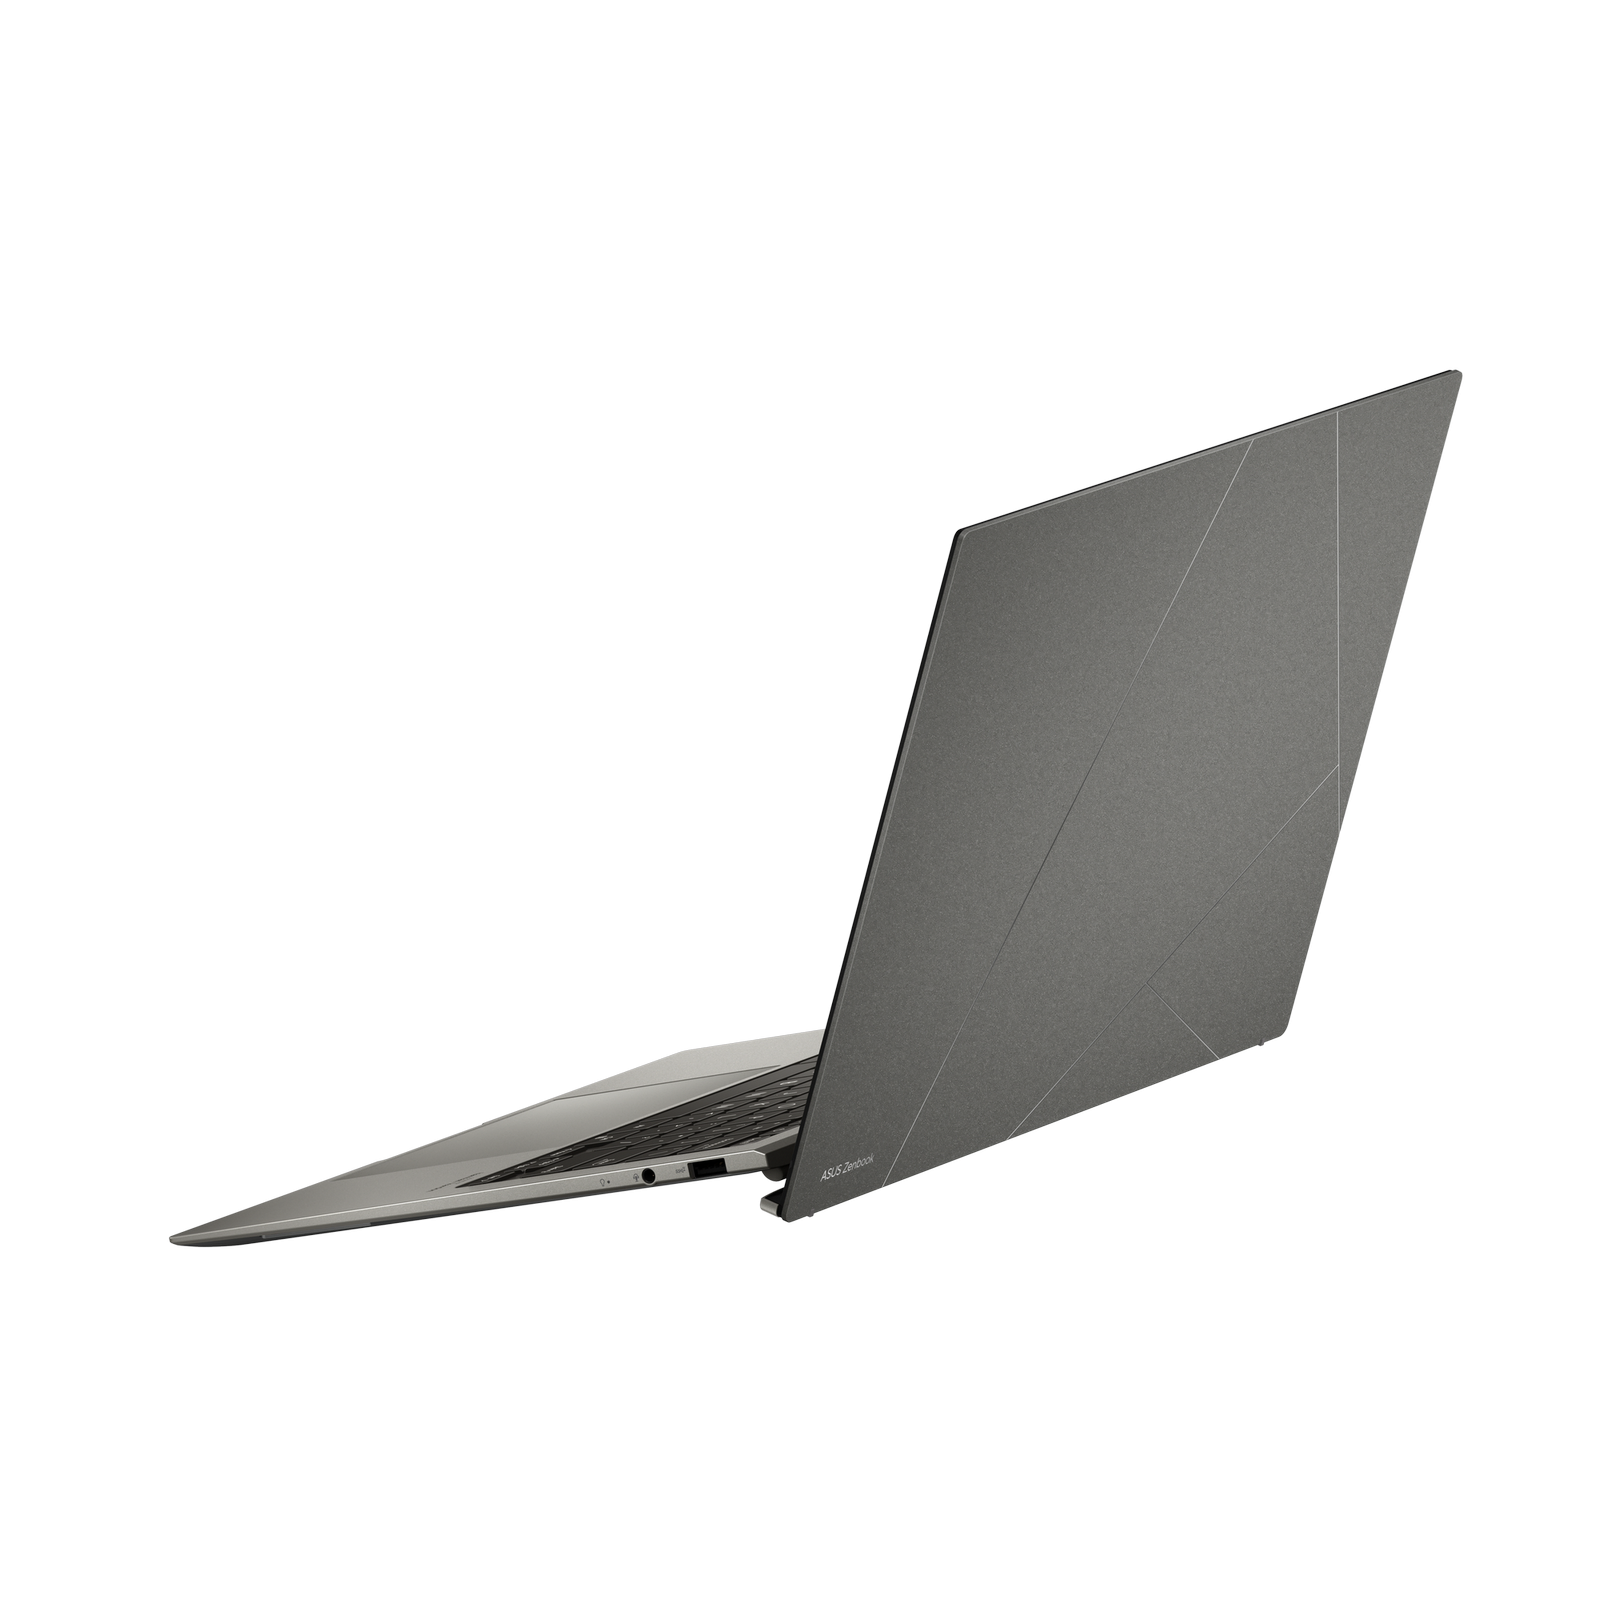 Zenbook S 13 OLED UX5304 Basalt Gray Basic 02 | asus | ASUS Zenbook S 13 OLED โน้ตบุ๊กจอ OLED บางที่สุดในโลก บาง 1 ซม. หนักเพียง 1 กก. พร้อมวางจำหน่ายไทย